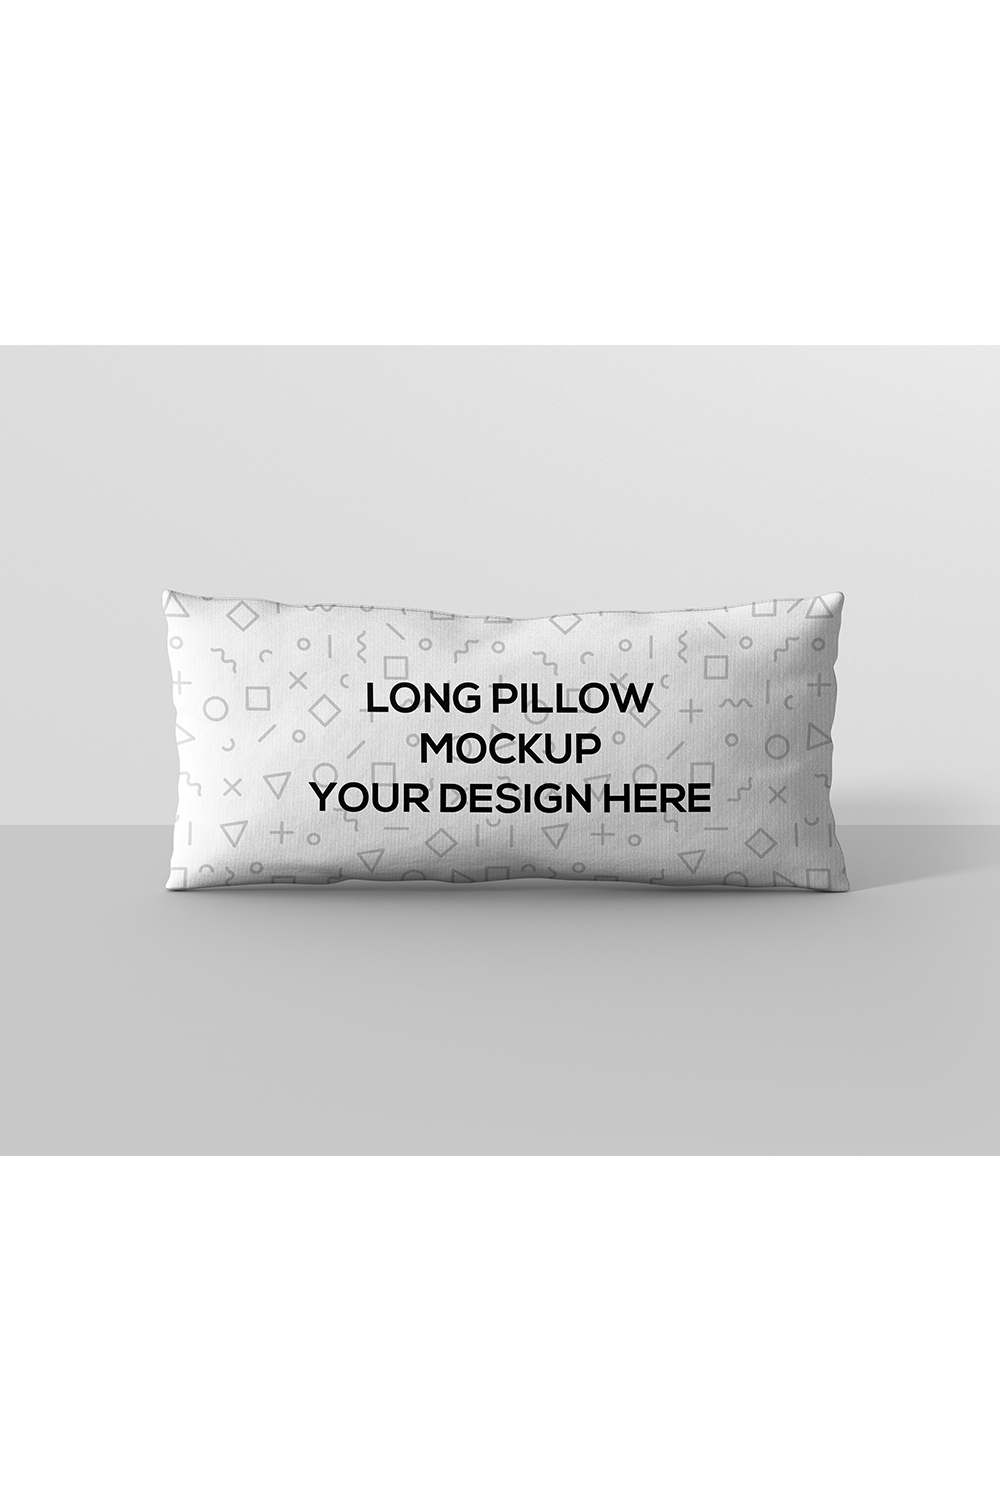 Long Rectangle Pillow Mockup pinterest preview image.